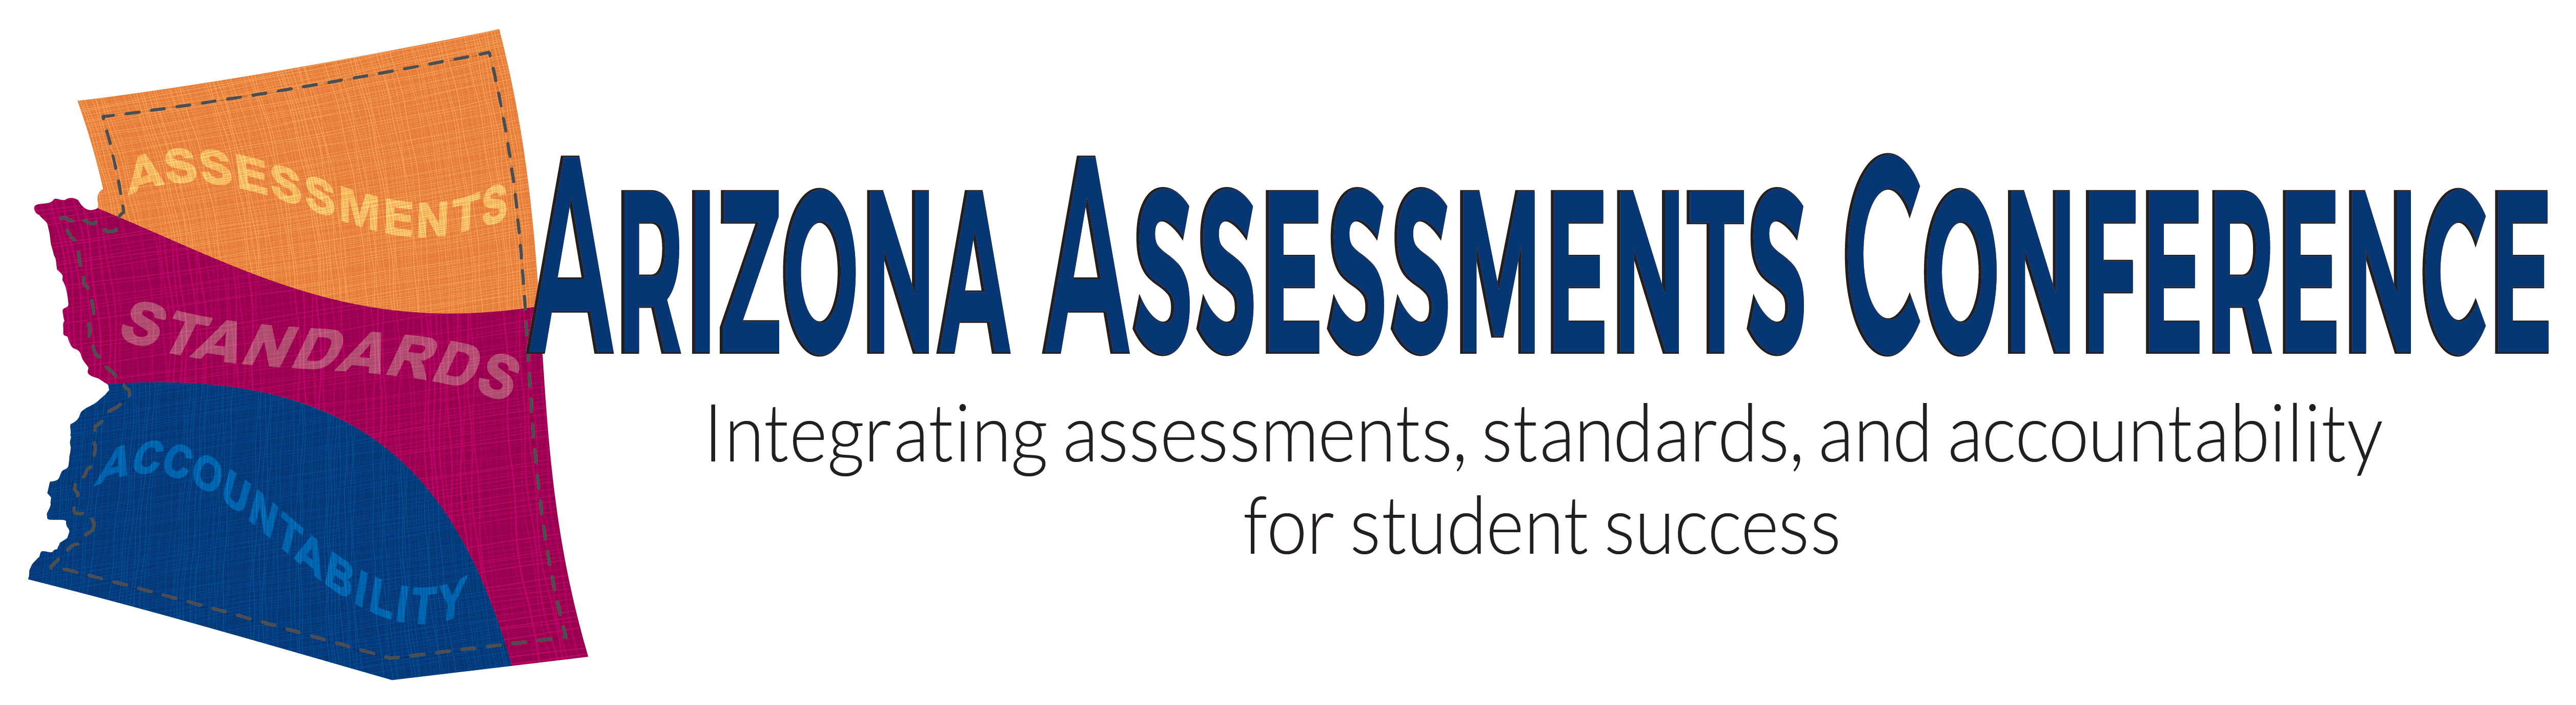 Assessments Conference Logo